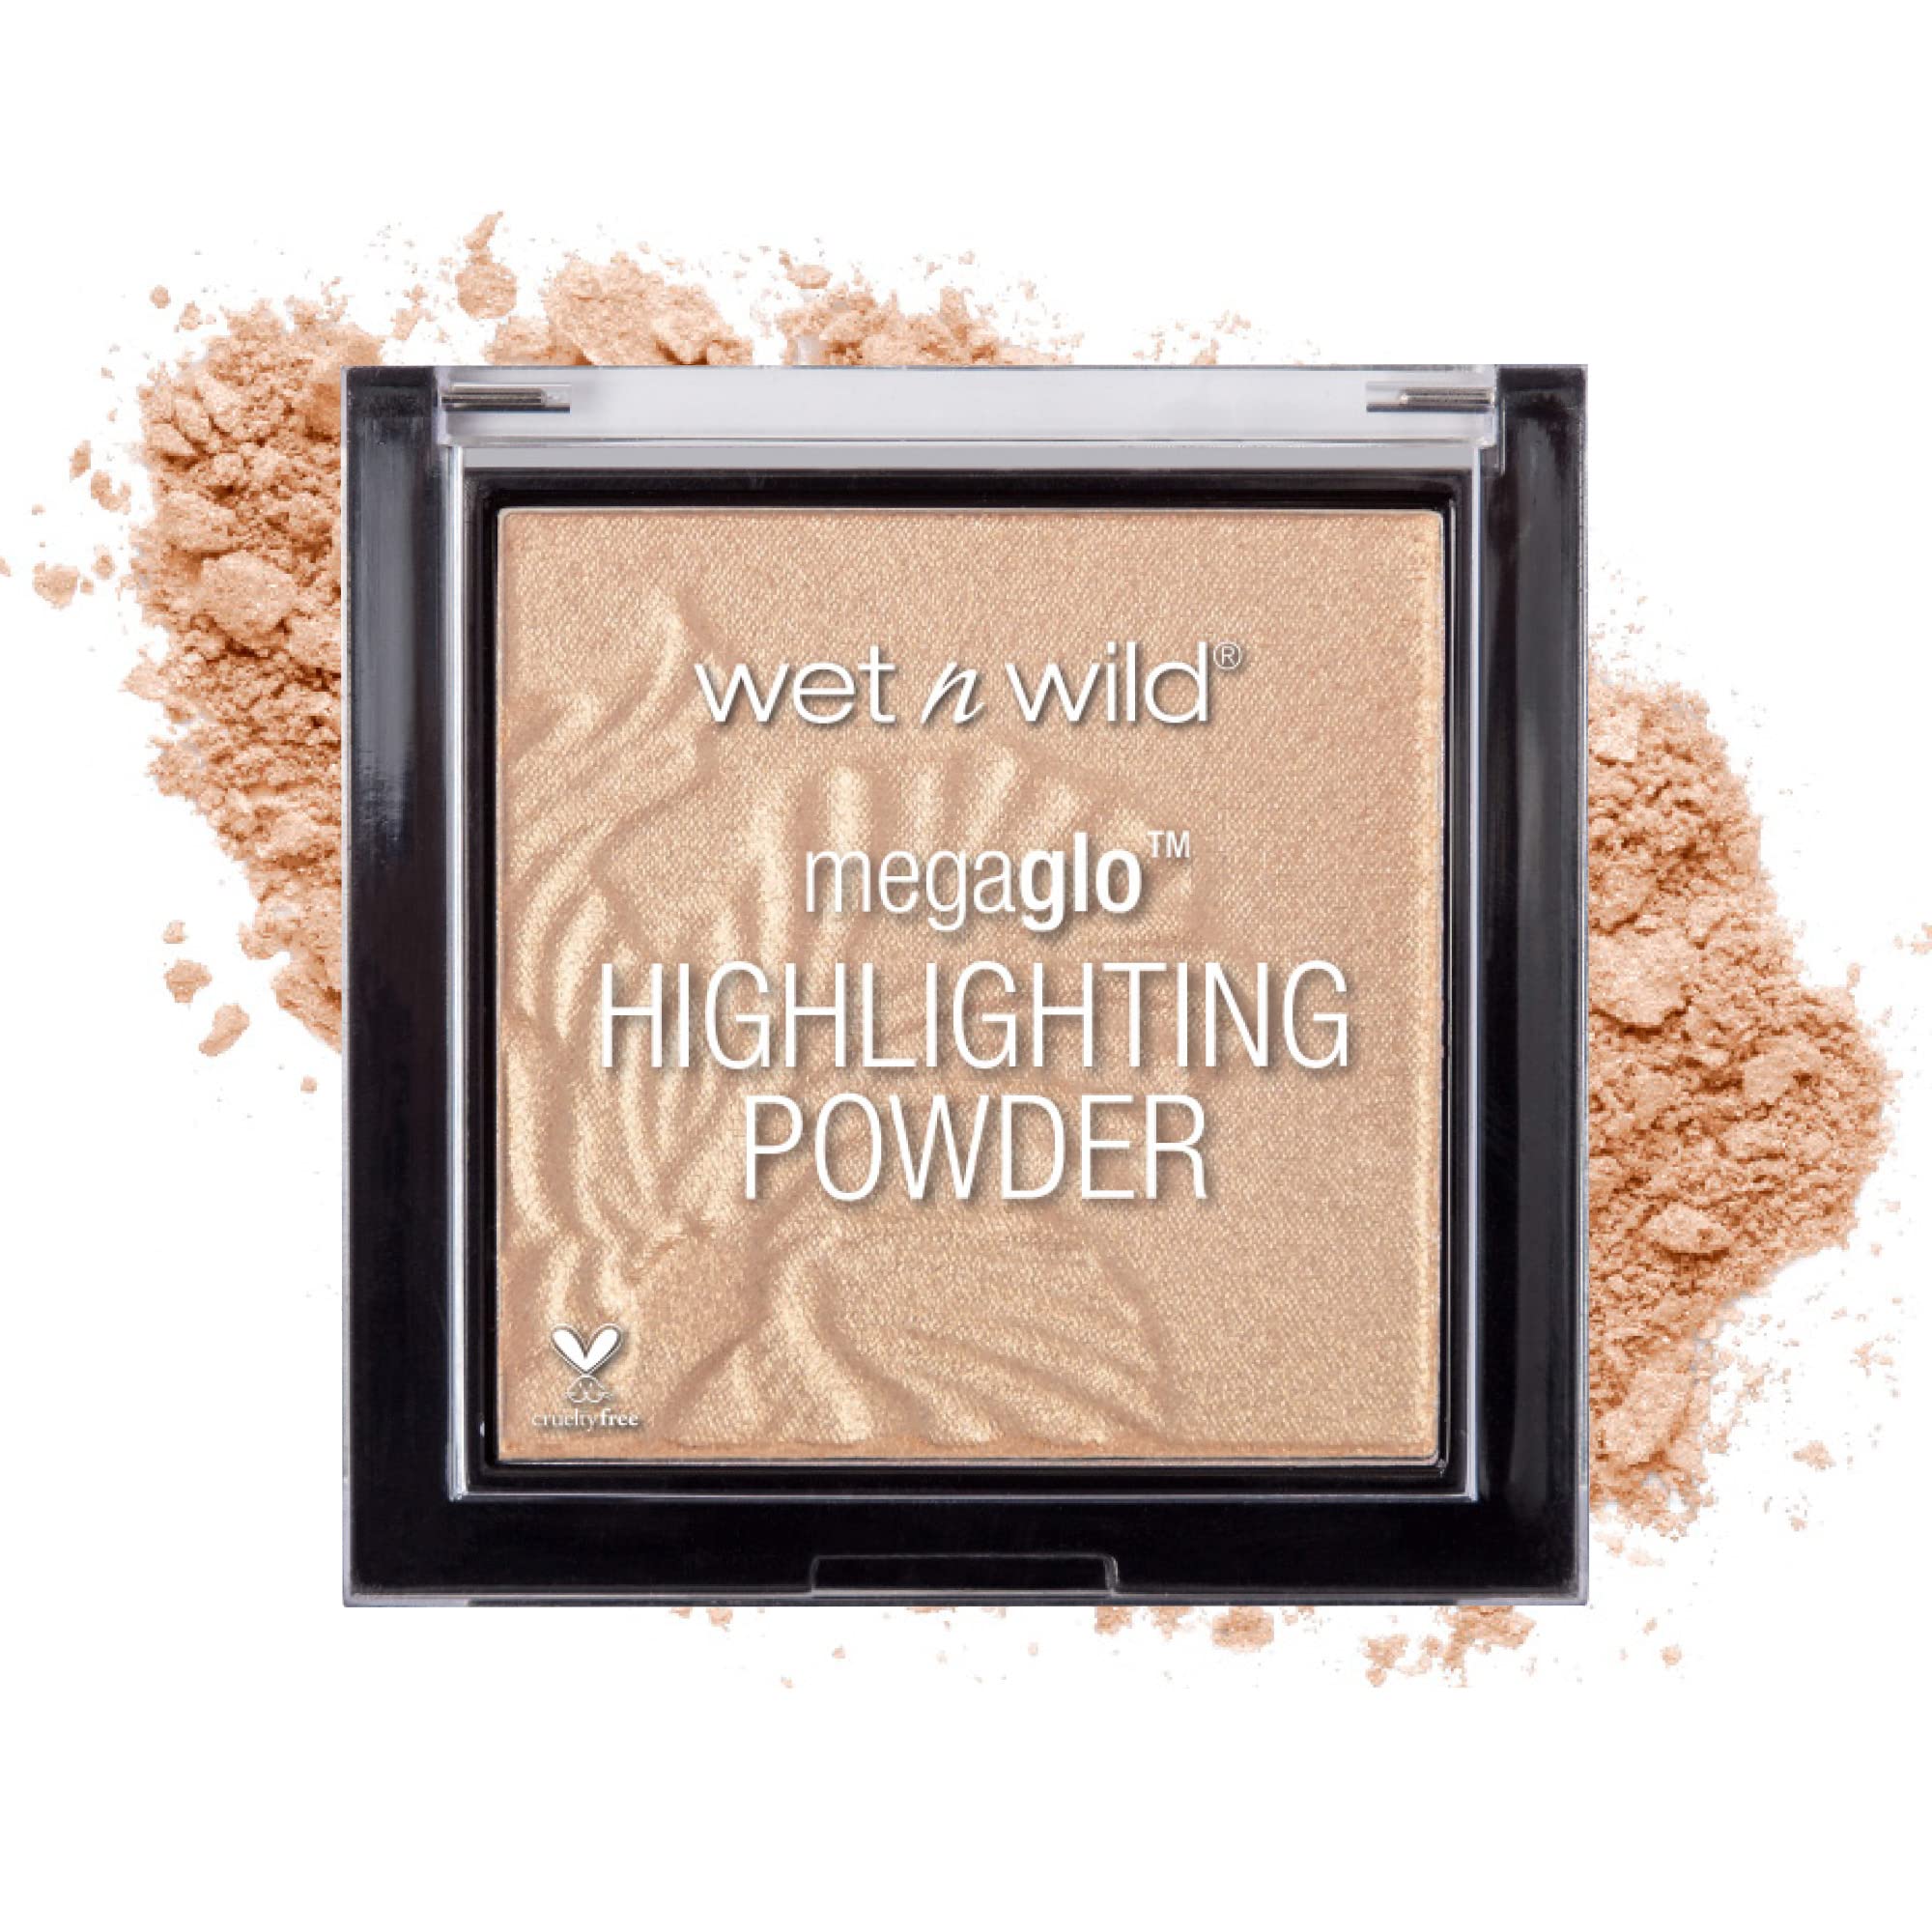 Wet n Wild MegaGlo Highlighting Powder Brown Golden Flower Crown, 0.19 Ounce